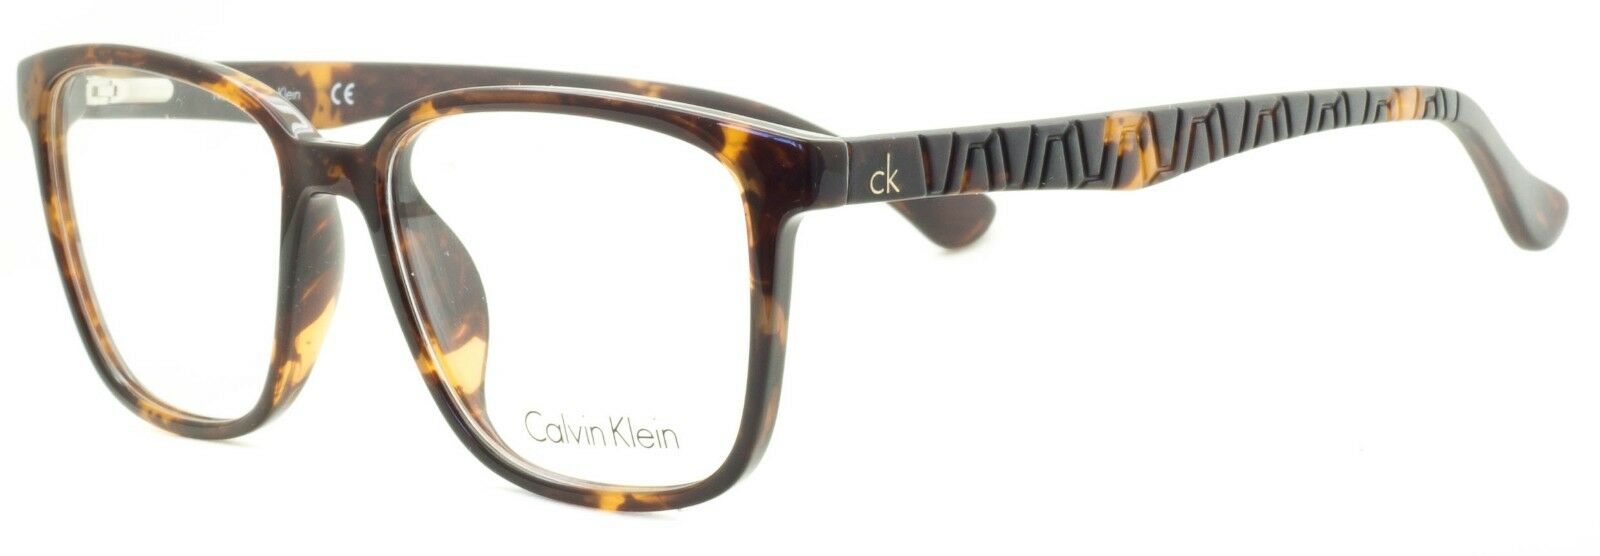 CALVIN KLEIN ck5857 214 Eyewear RX Optical FRAMES NEW Eyeglasses Glasses - BNIB